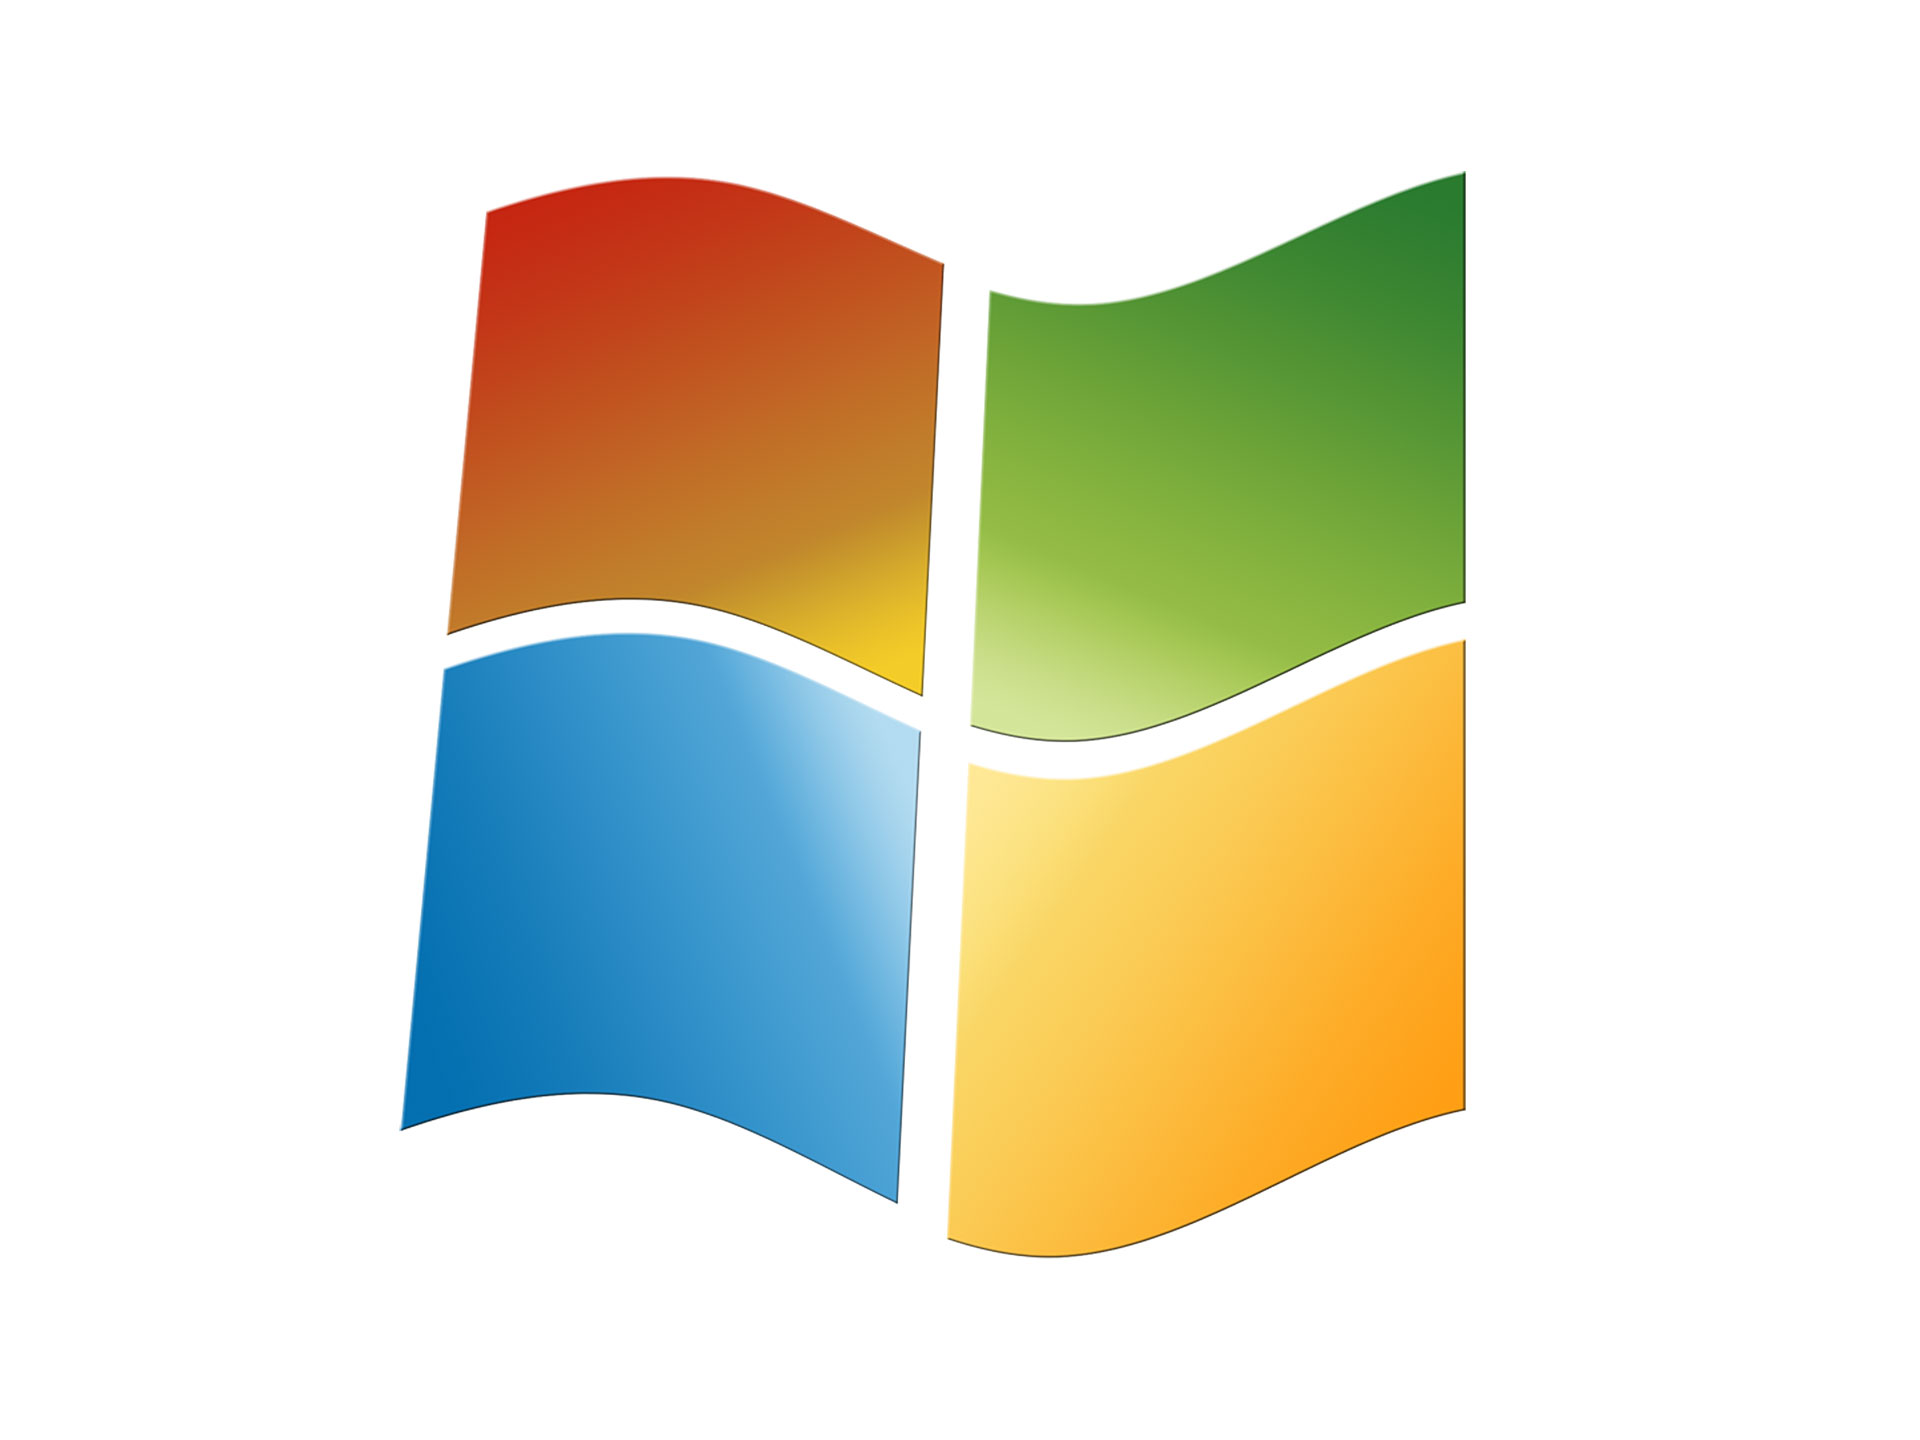 Microsoft Windows 7 ESU - Extended Security Updates